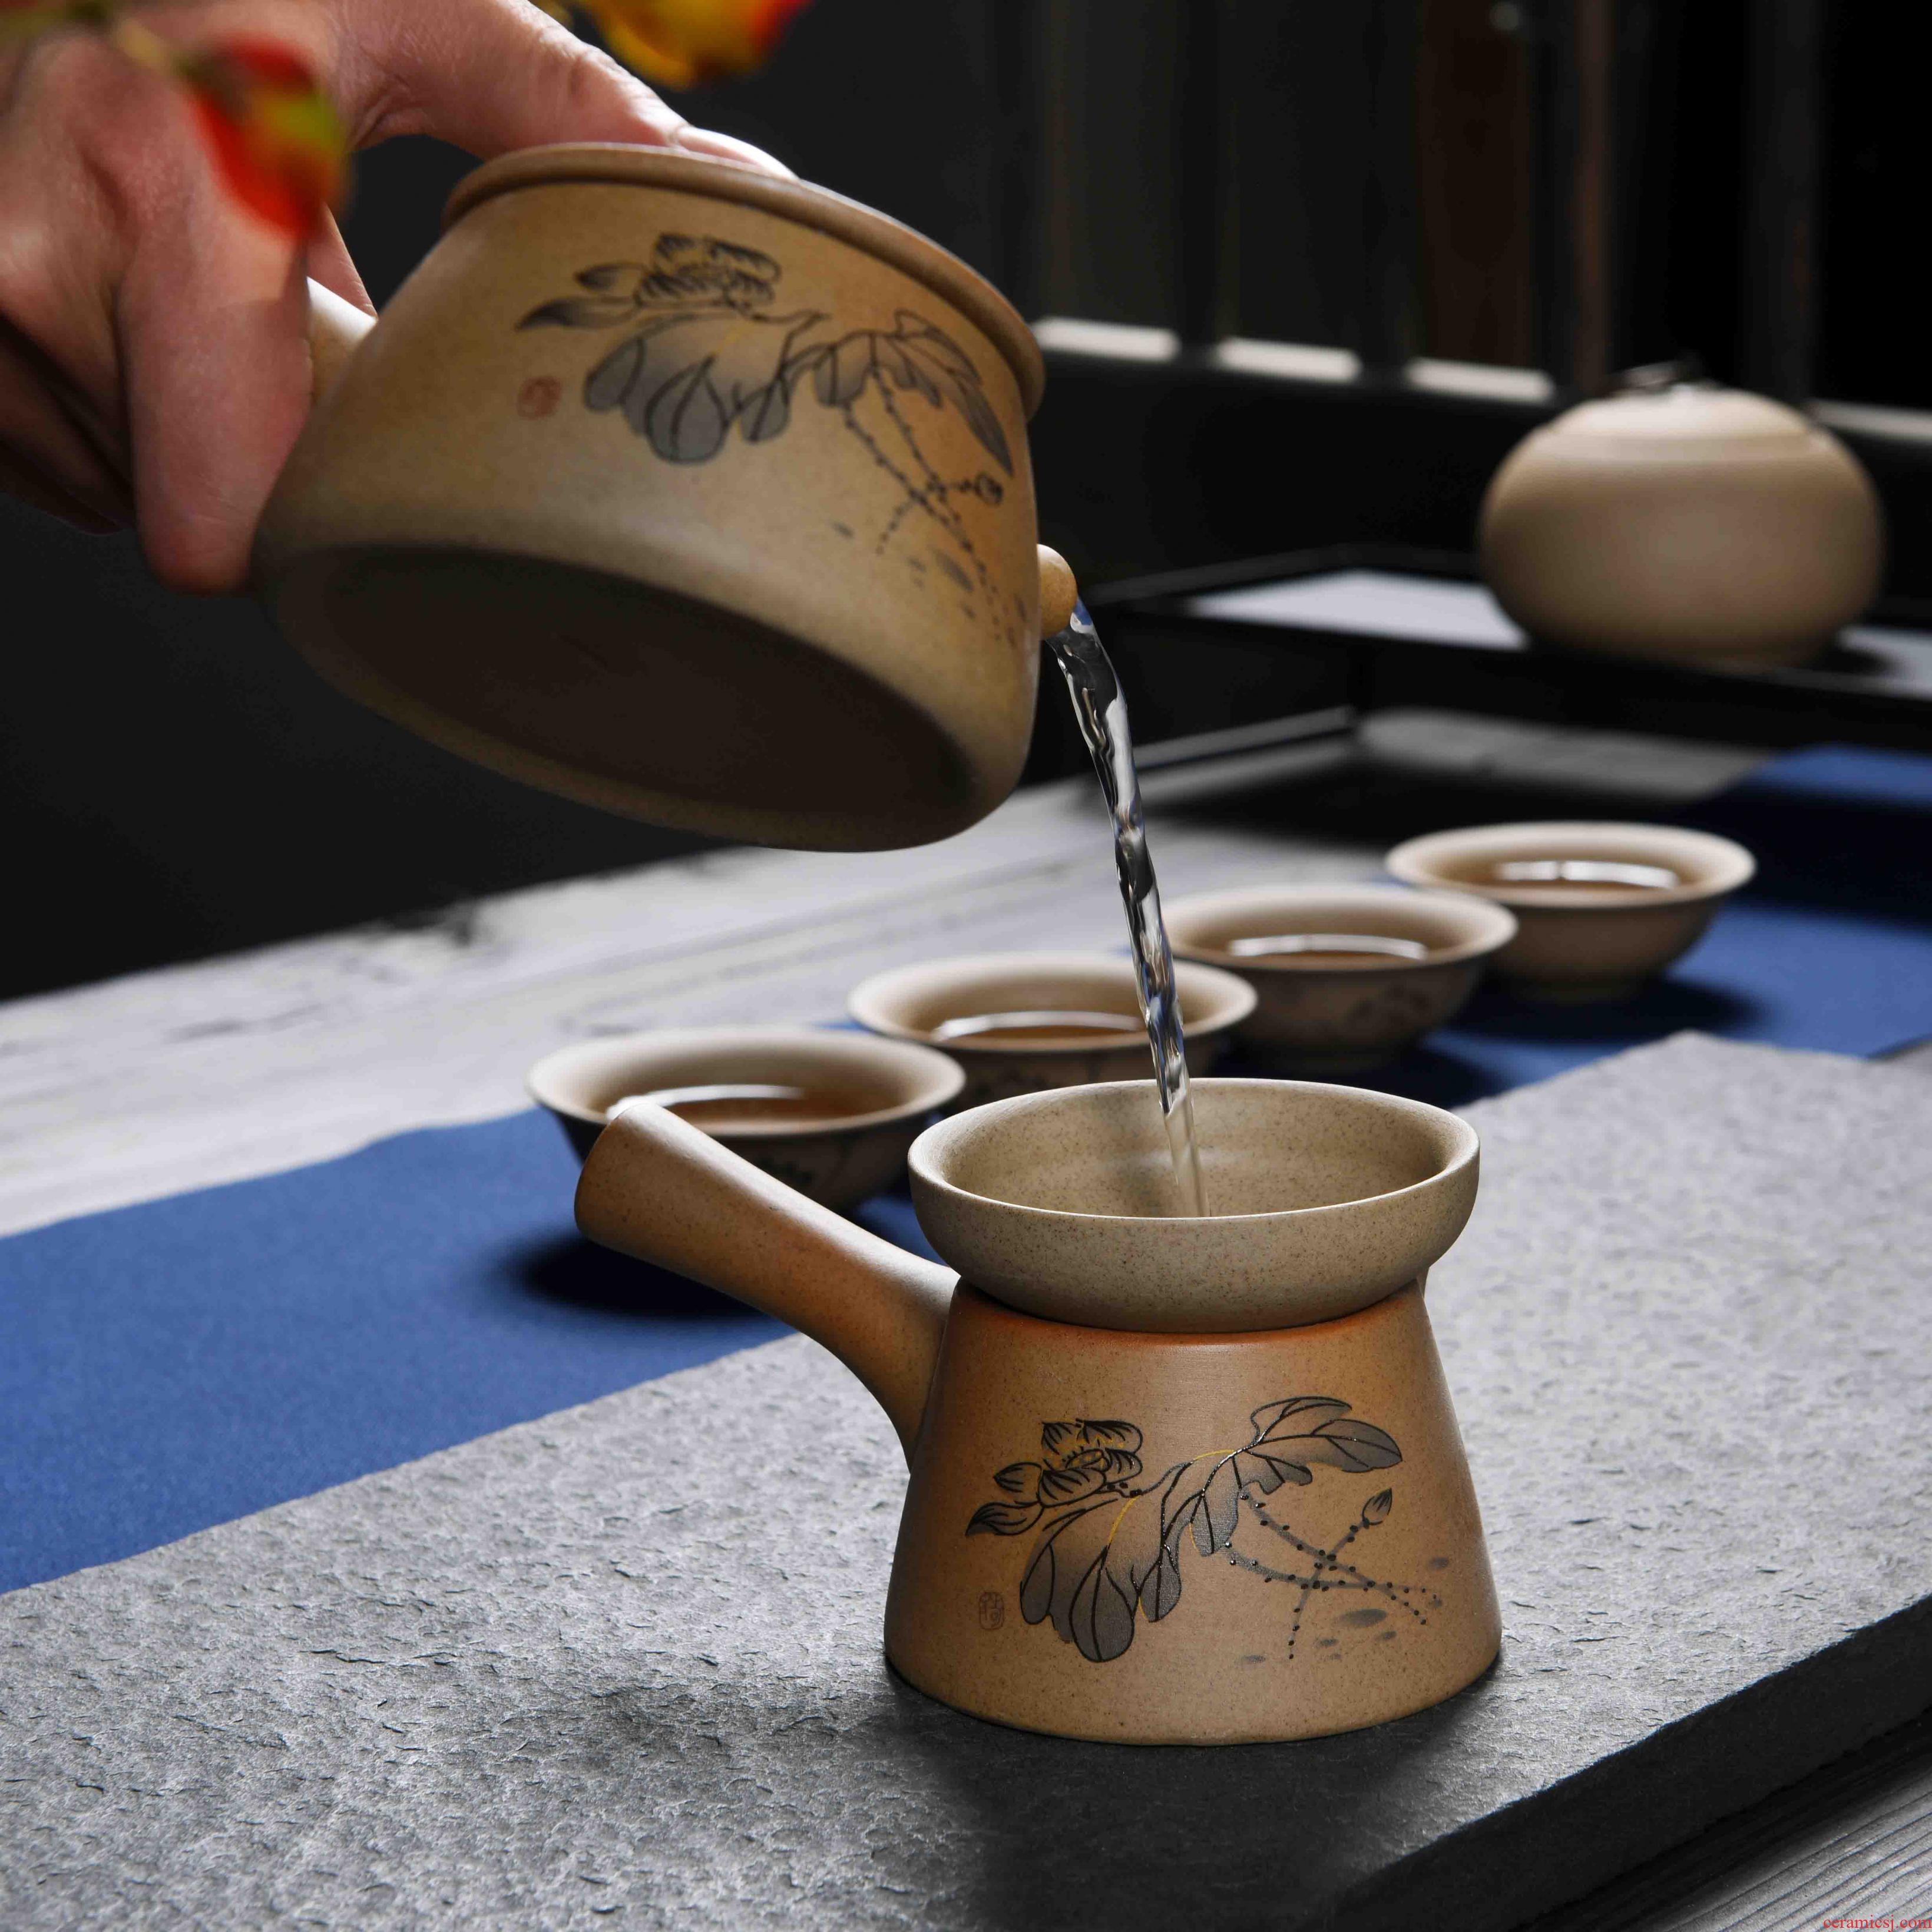 Talk of a complete set of coarse pottery kung fu tea set ceramic cups xi shi pot side put the teapot lid to use tea set